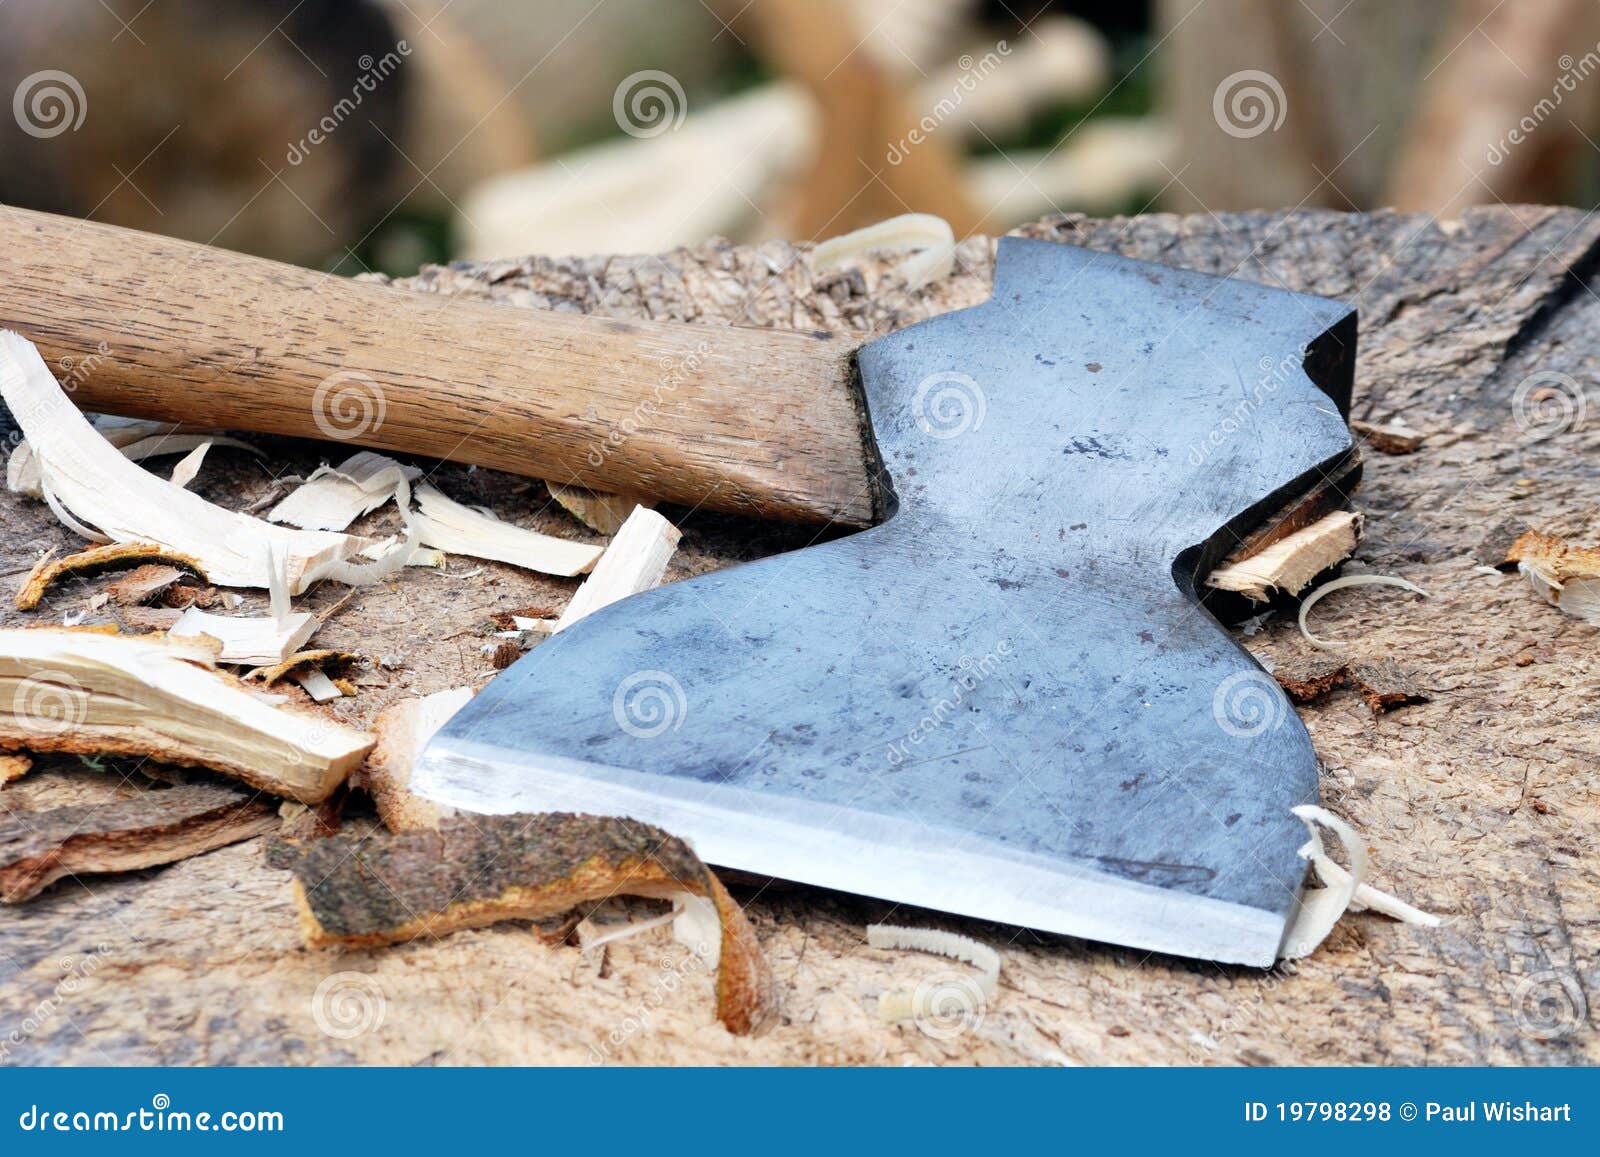 axe on chopping block